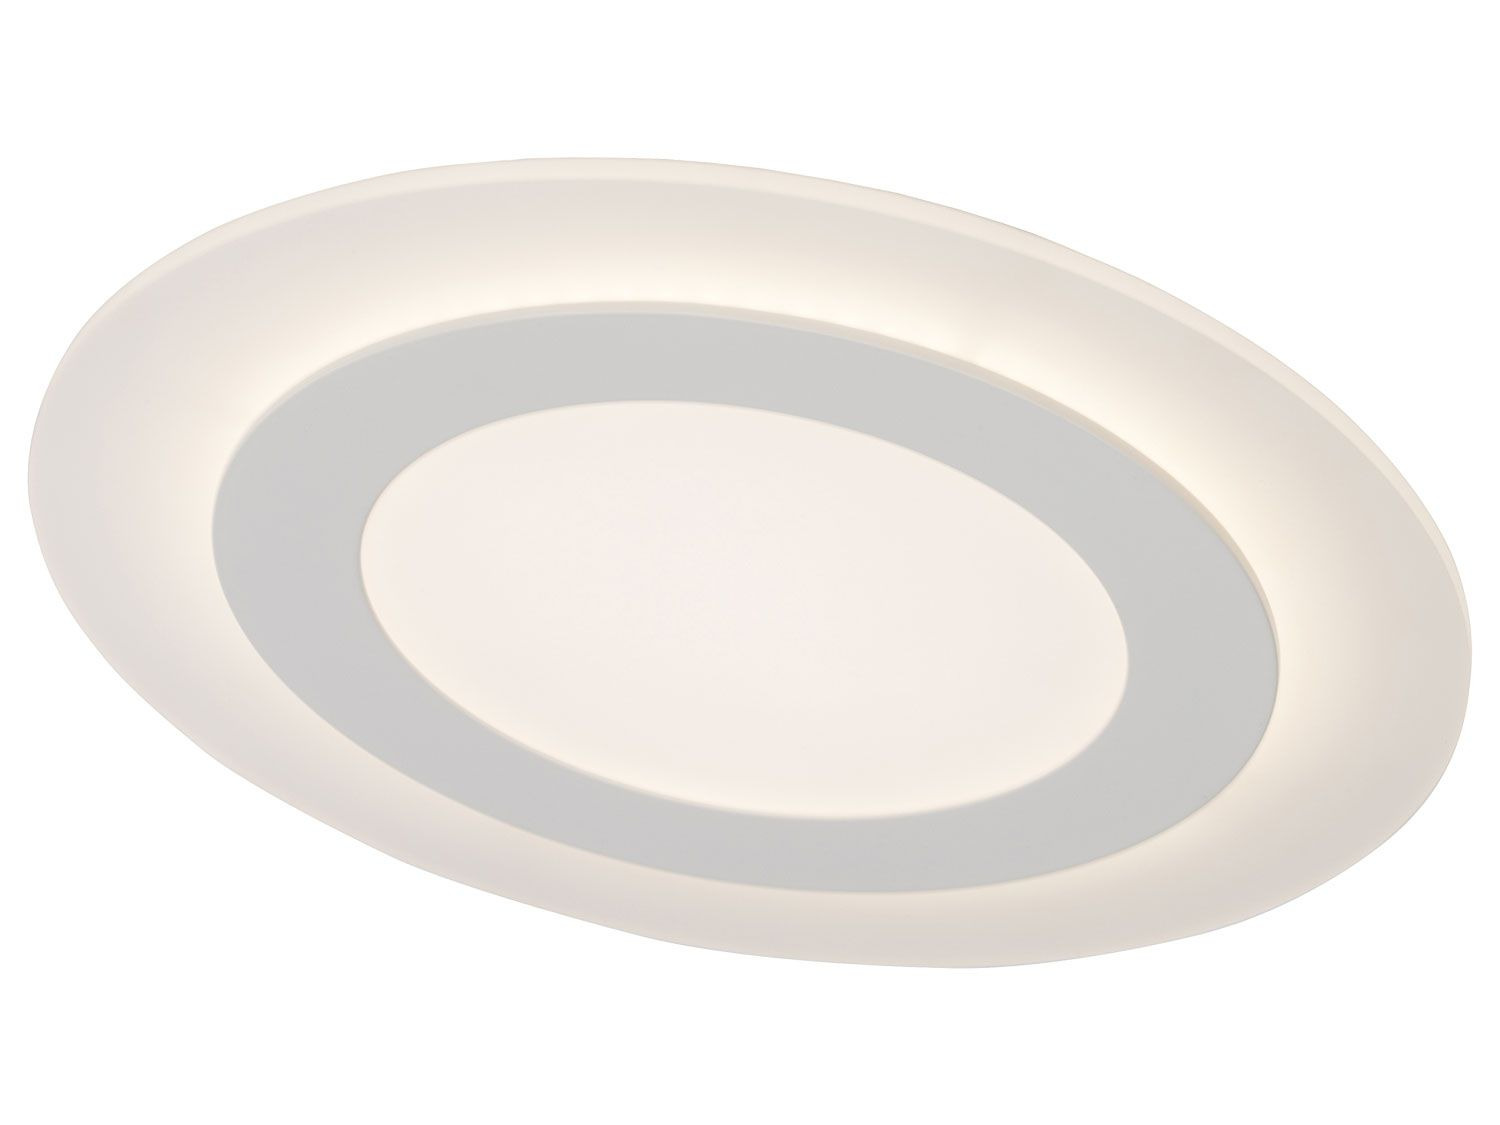 AEG LED LIDL cm, Deckenleuchte weiß »Karia« | 35